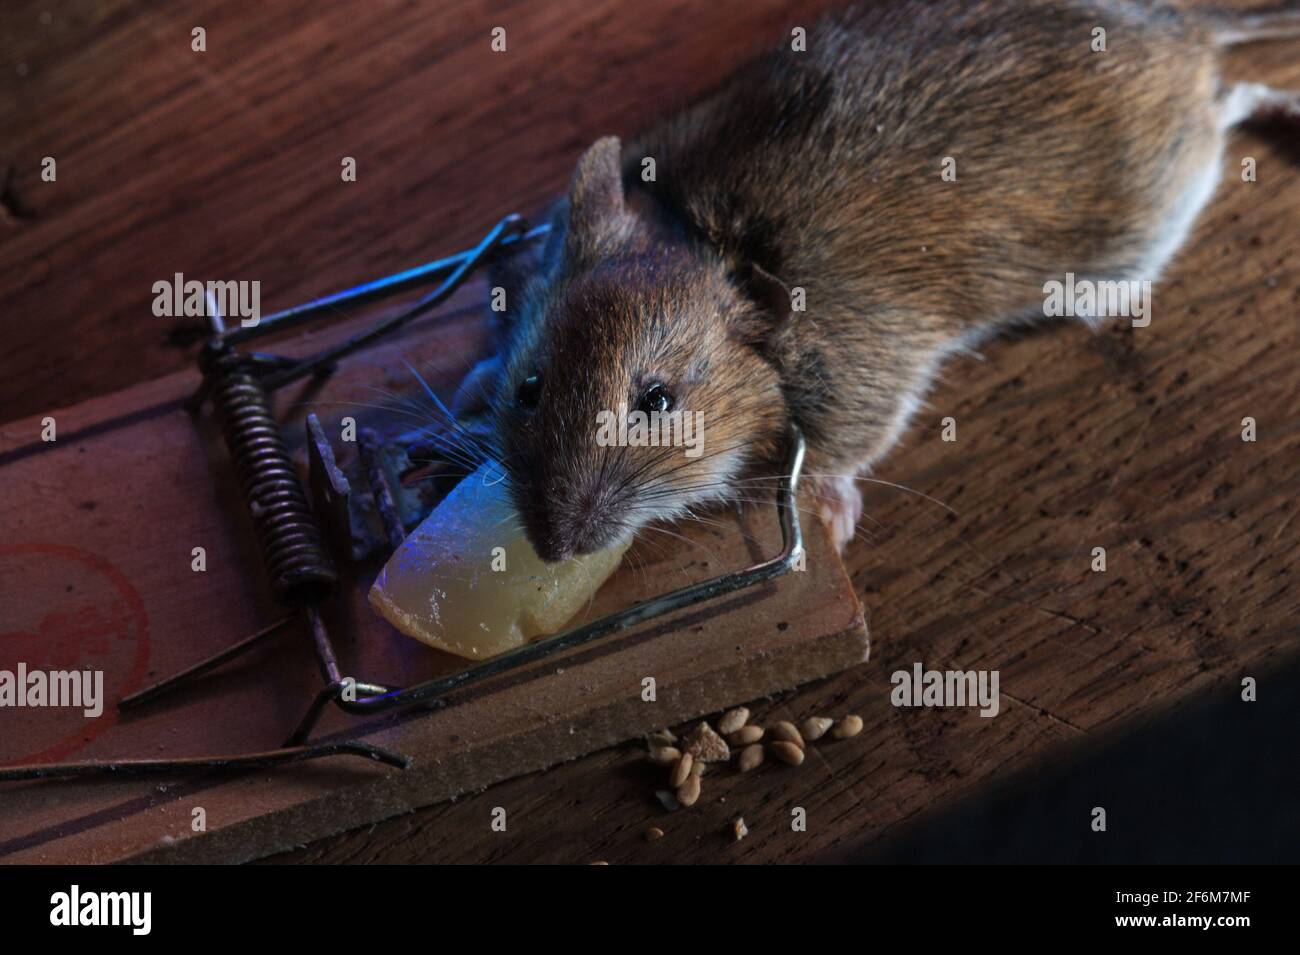 Maus in der Mausefalle gefangen | mouse catturati in una trappola del mouse Foto Stock